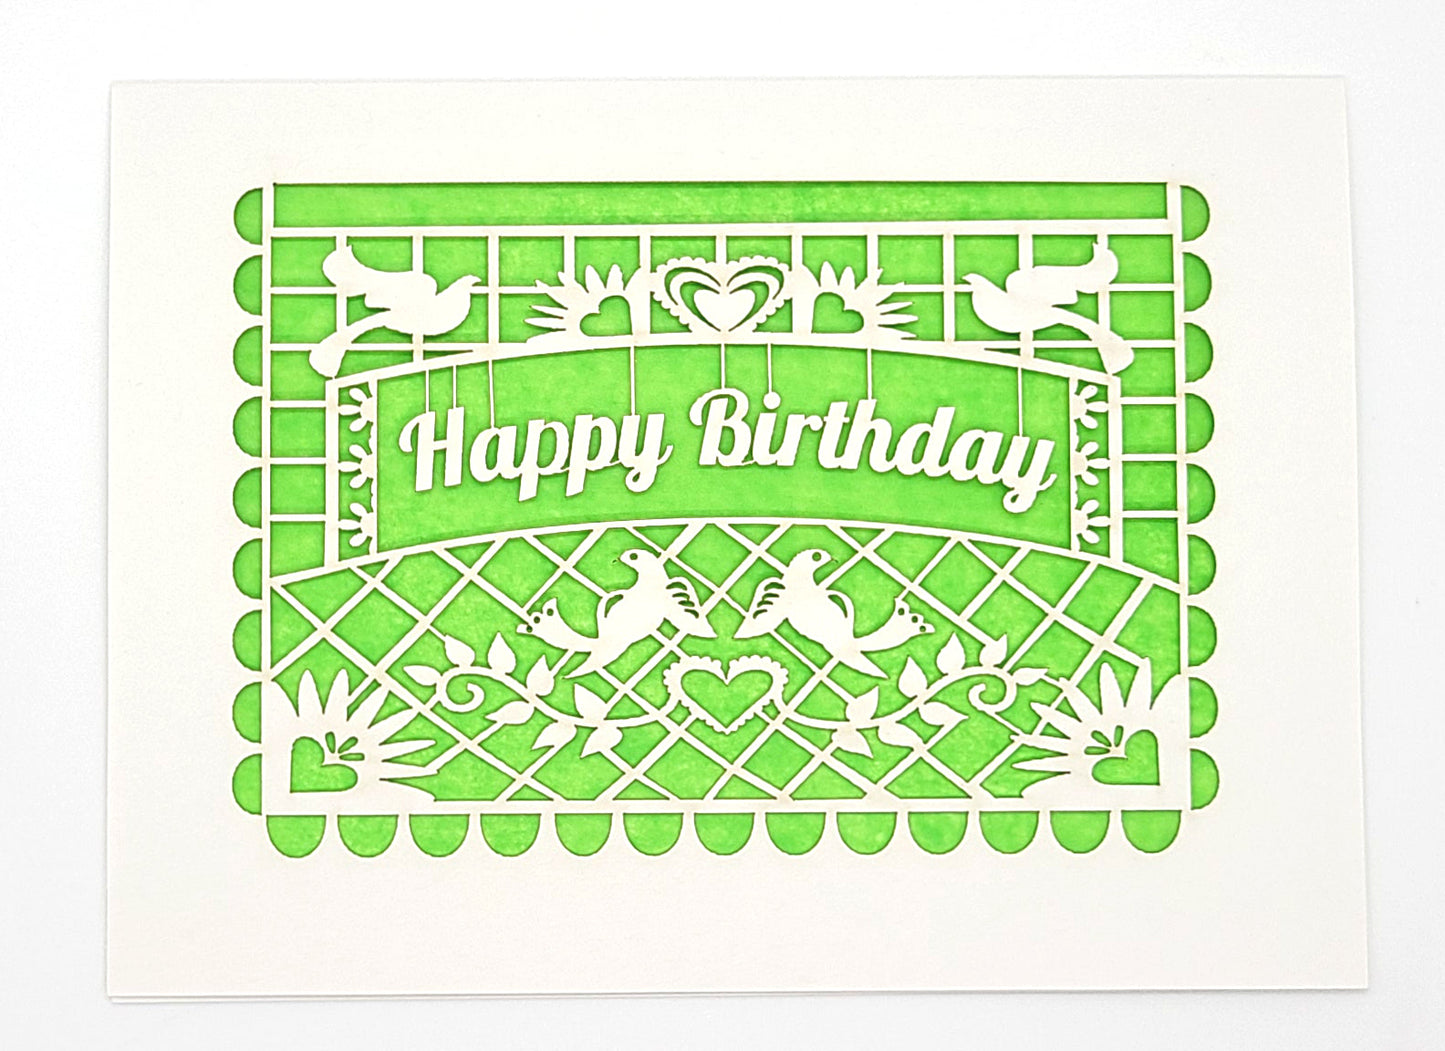 Papel Picado Greeting Card: Happy Birthday